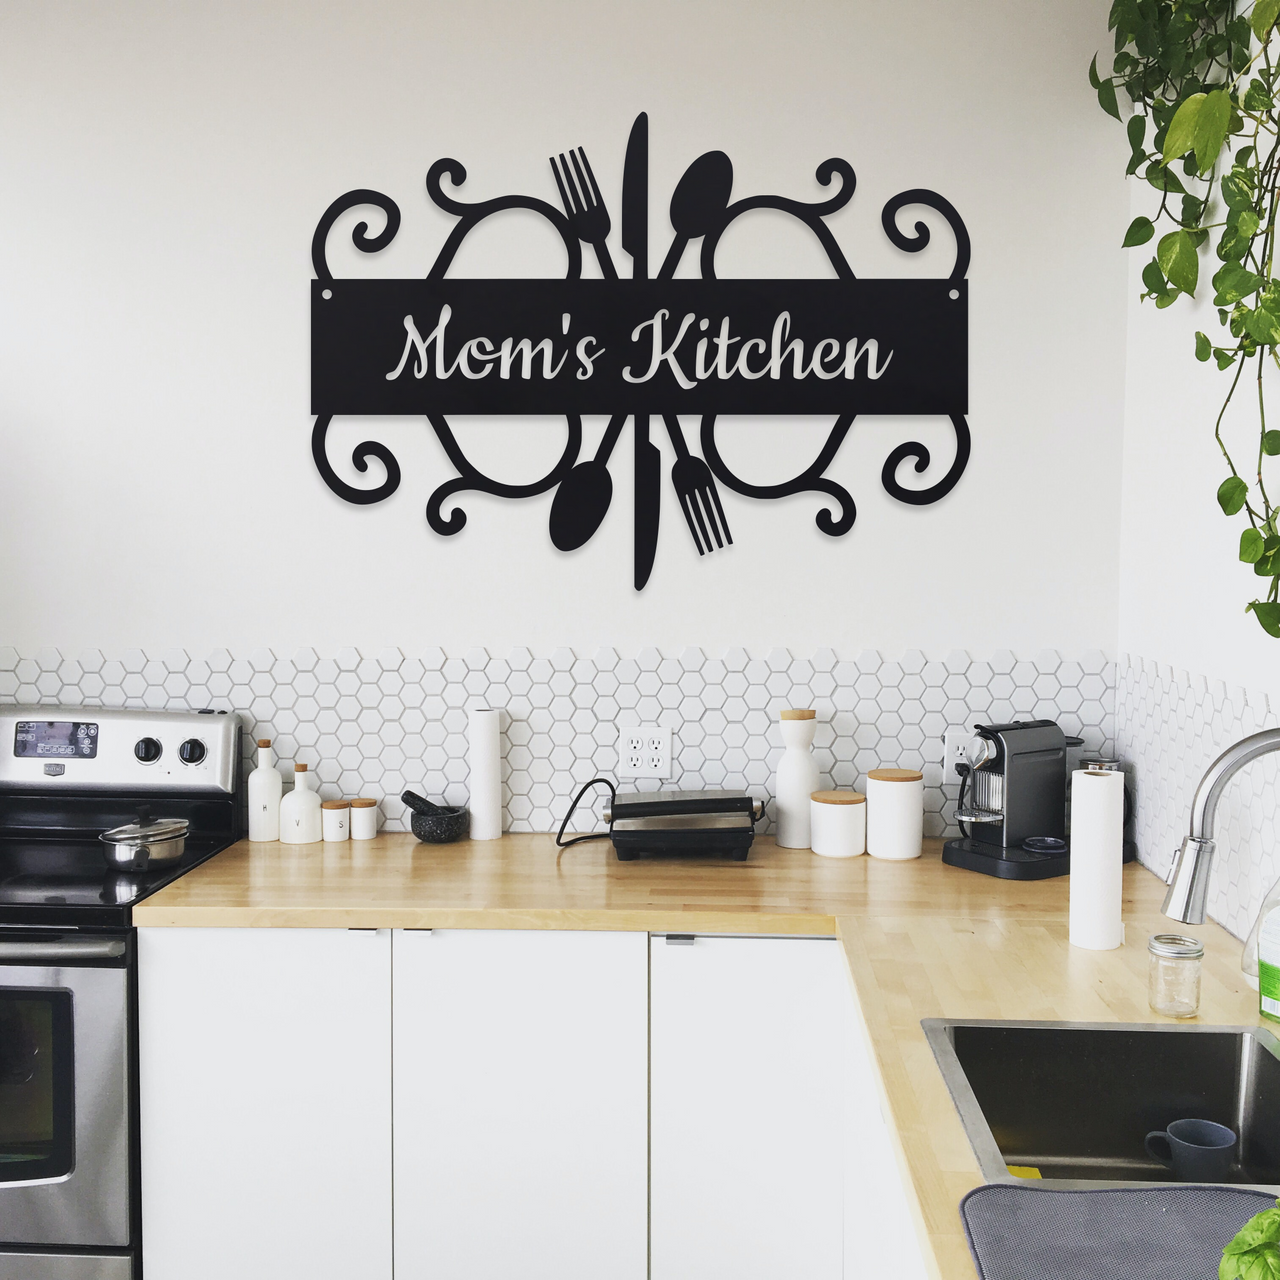 Mom's Kitchen Metal Sign - Custom Metal Kitchen Wall Art - Personalized Rustic Farmhouse Decor